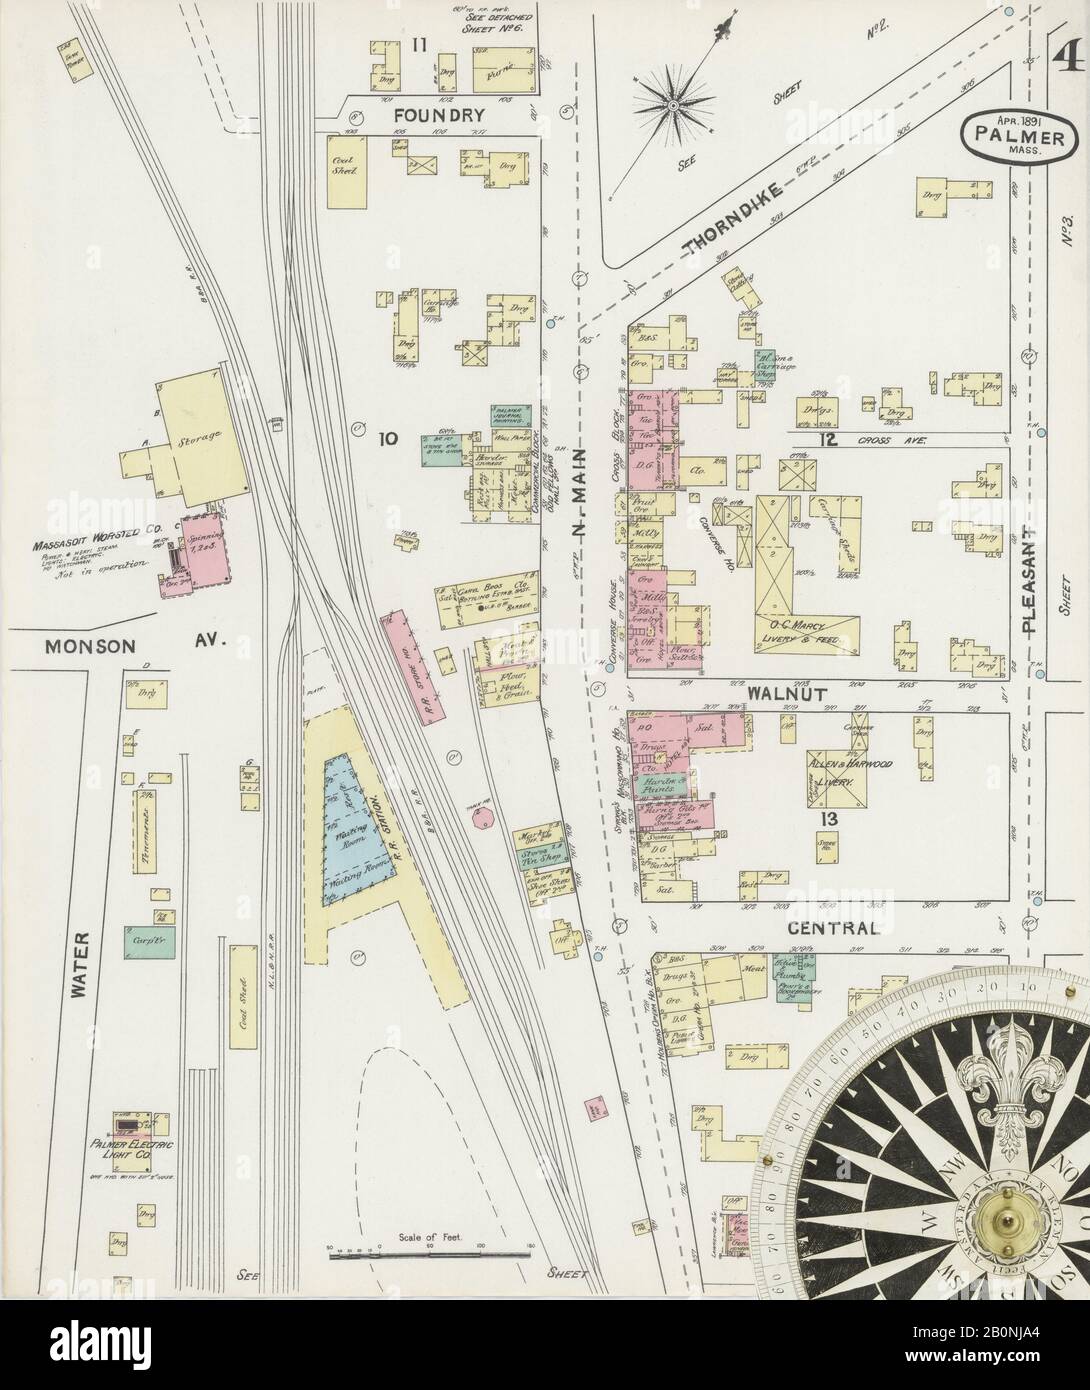 Bild 4 von Sanborn Fire Insurance Map aus Palmer, Hampden County, Massachusetts. Apr. 6 Blatt(e), Amerika, Straßenkarte mit einem Kompass Aus Dem 19. Jahrhundert Stockfoto